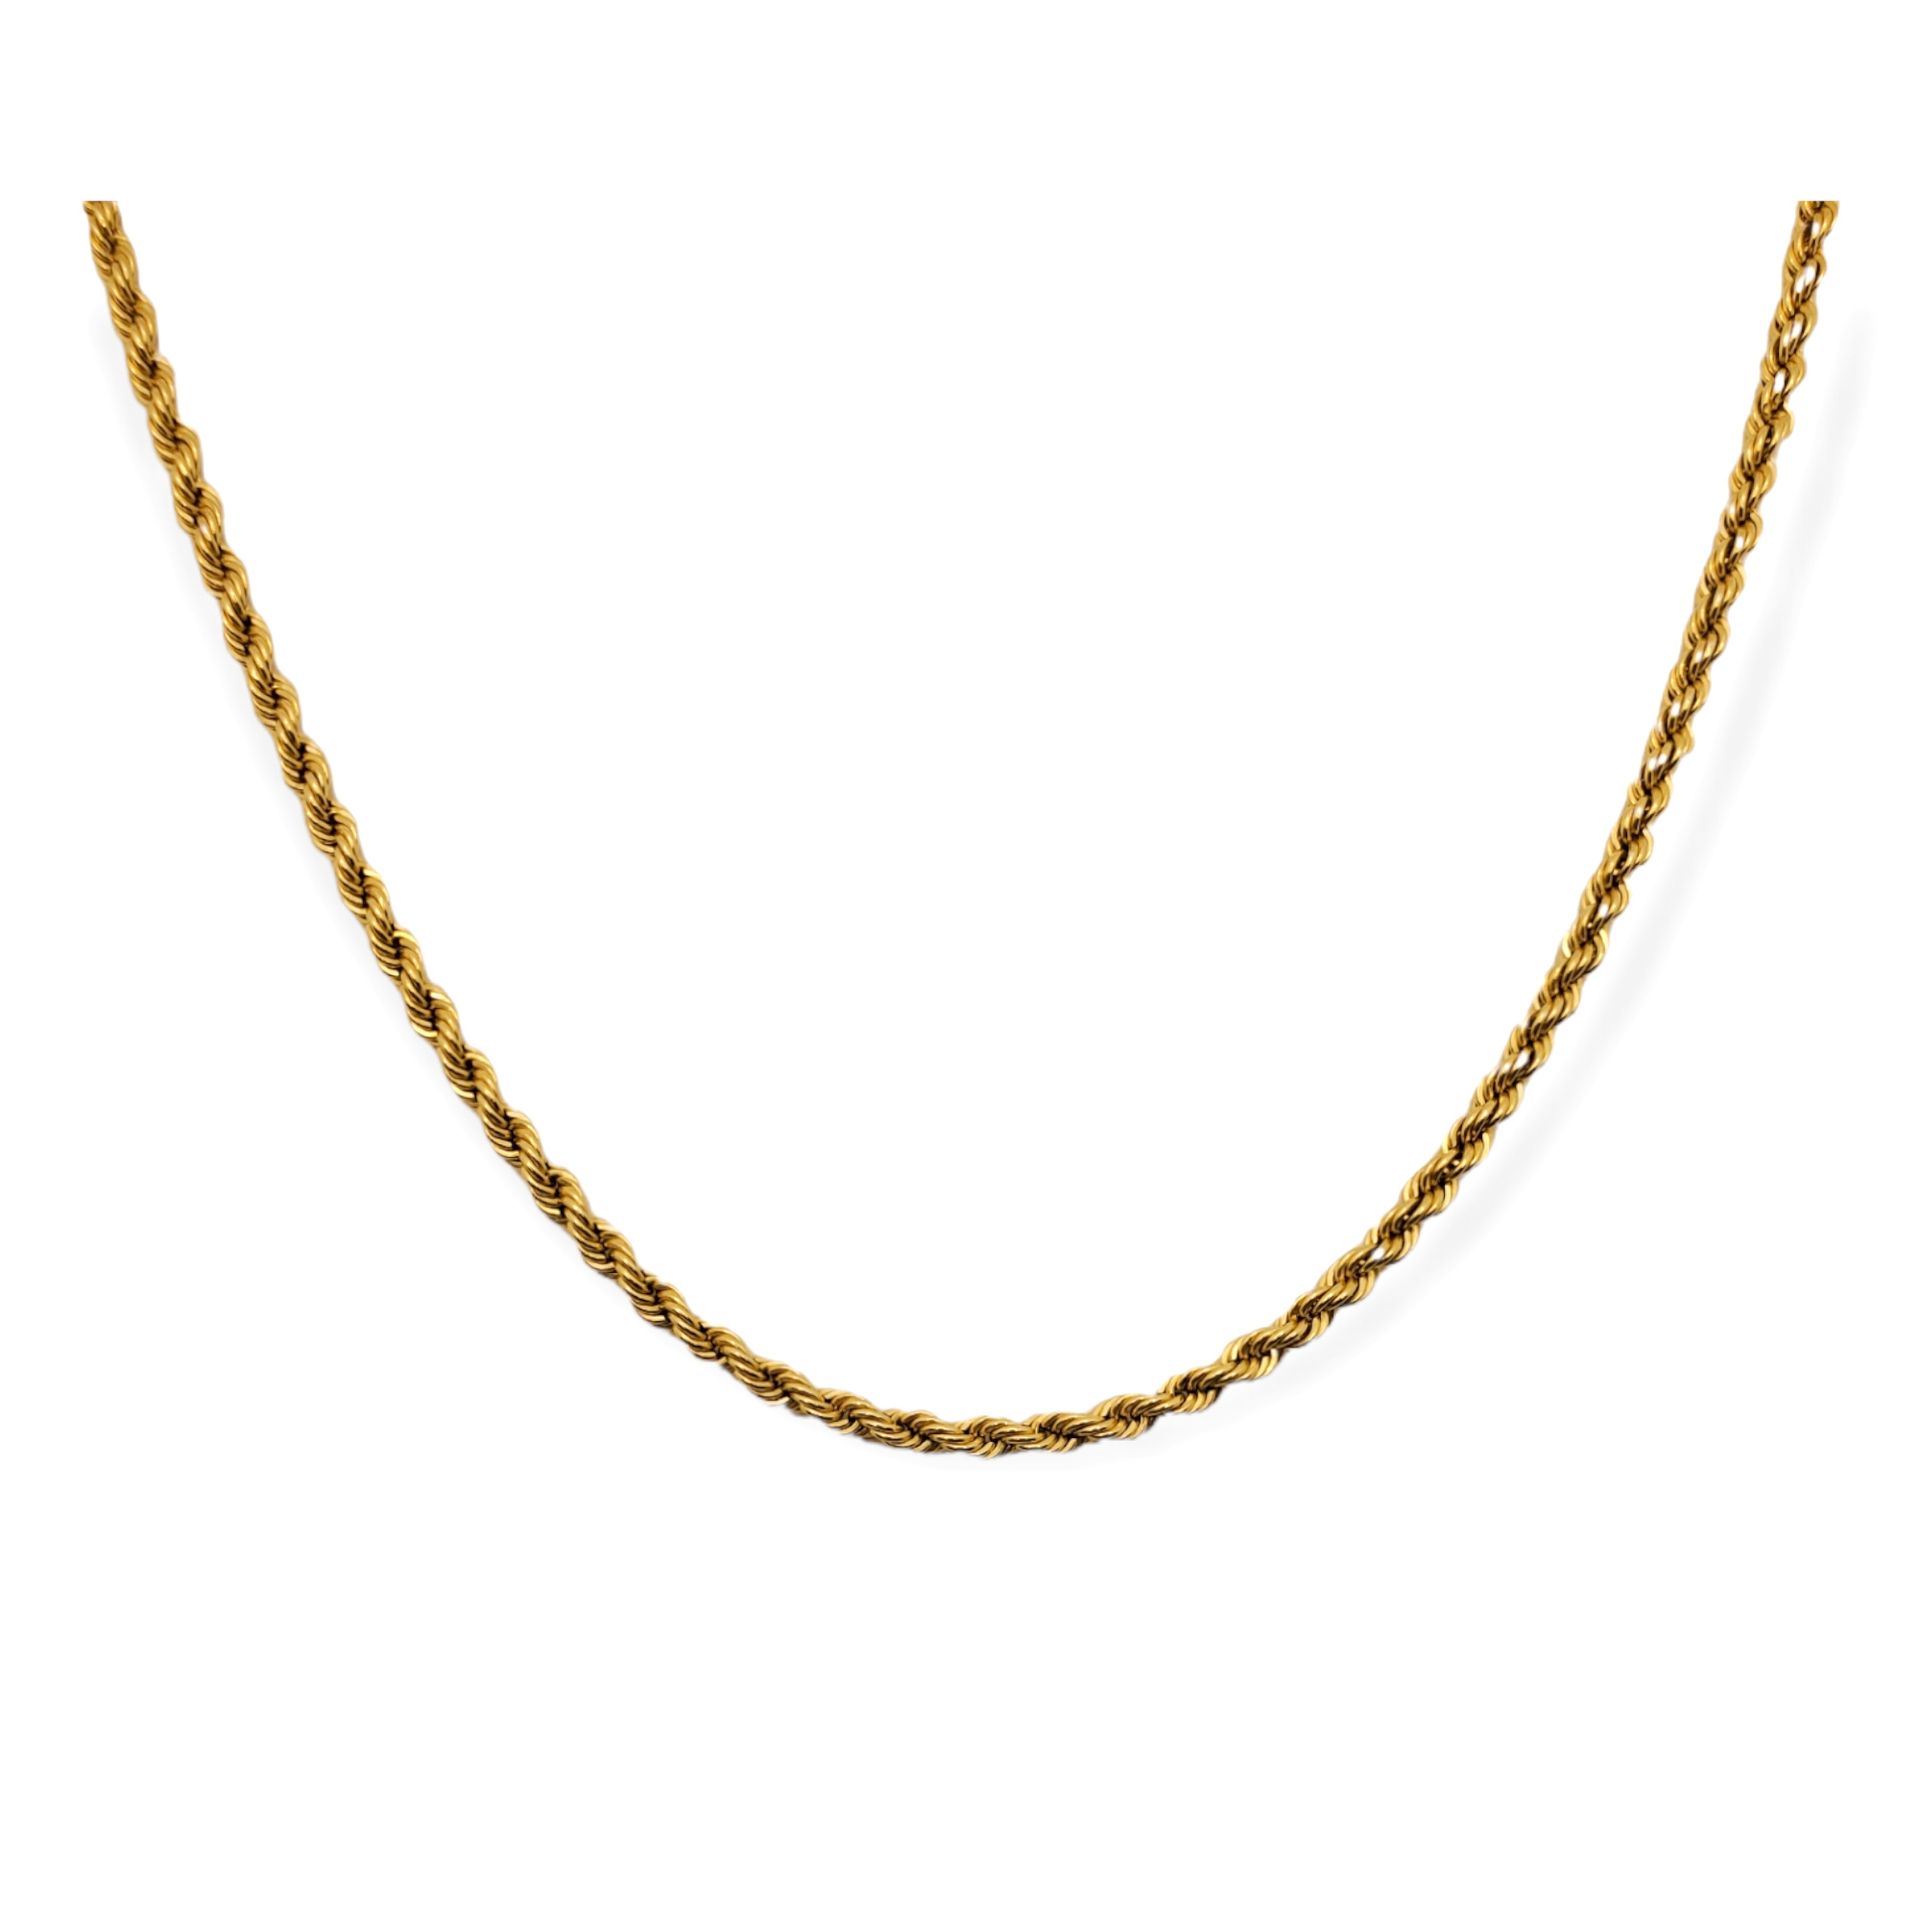 Cadena cordón Cadena type cordon in 18k gold. 

Medida 50cm. Weight 9,28g